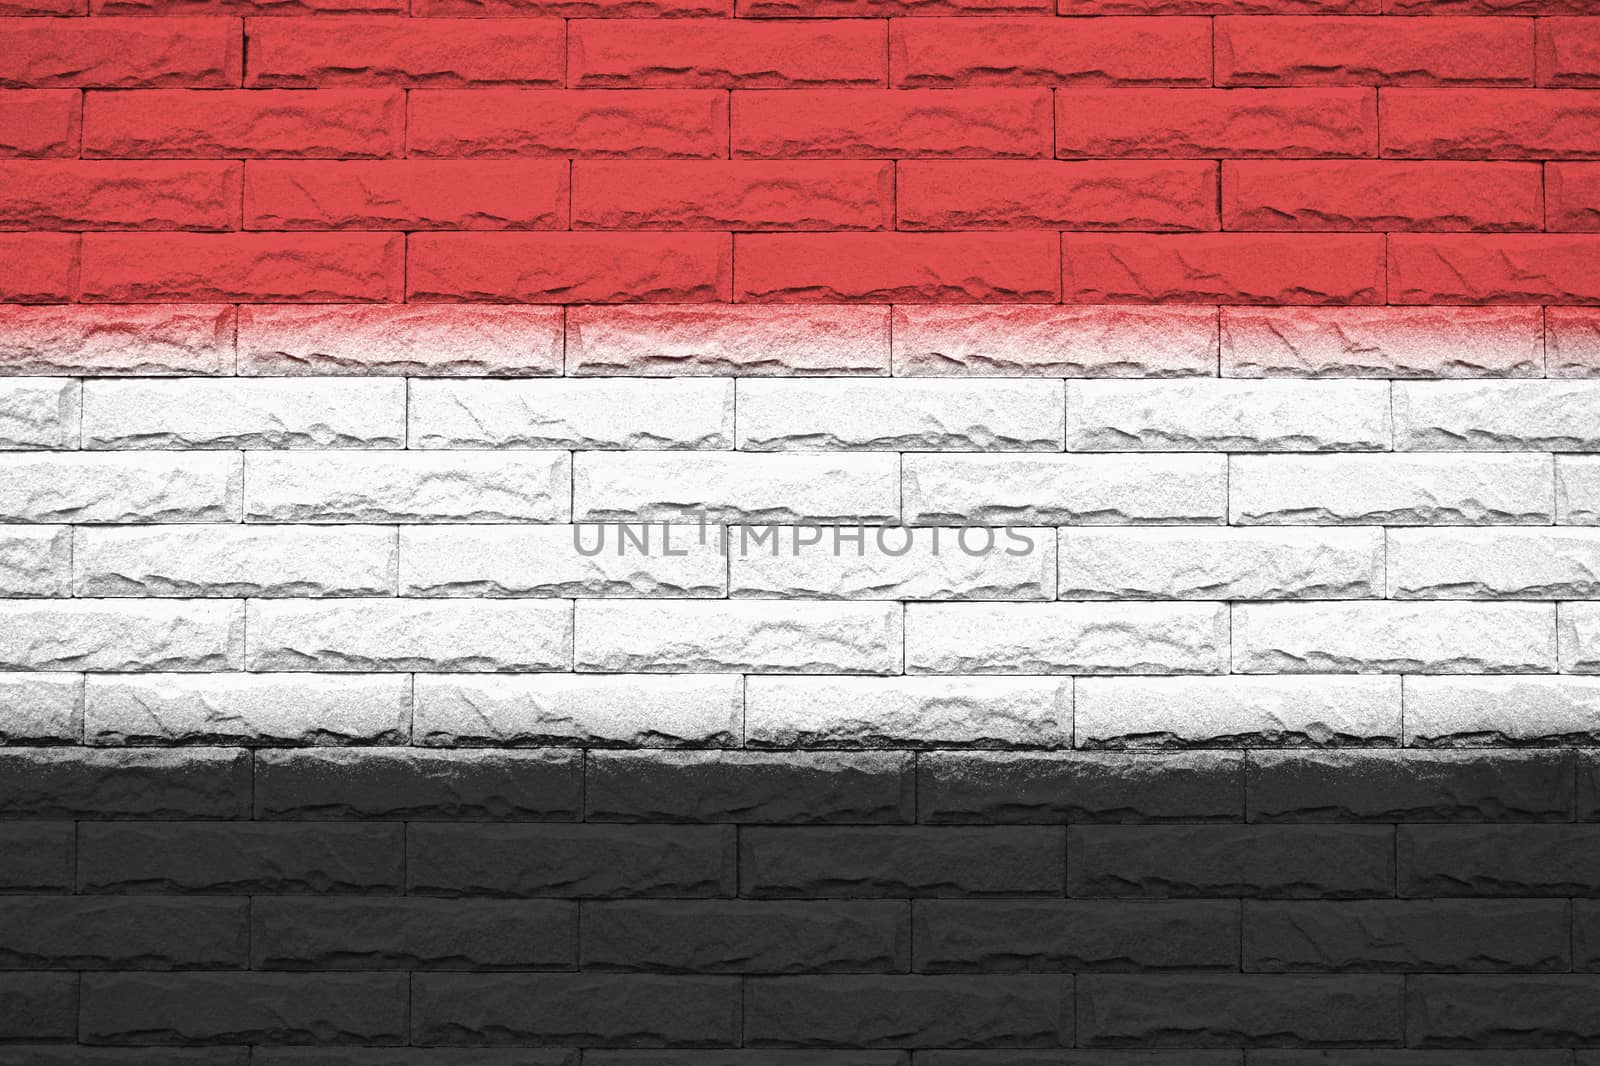 Yemen brick wall background, National flag